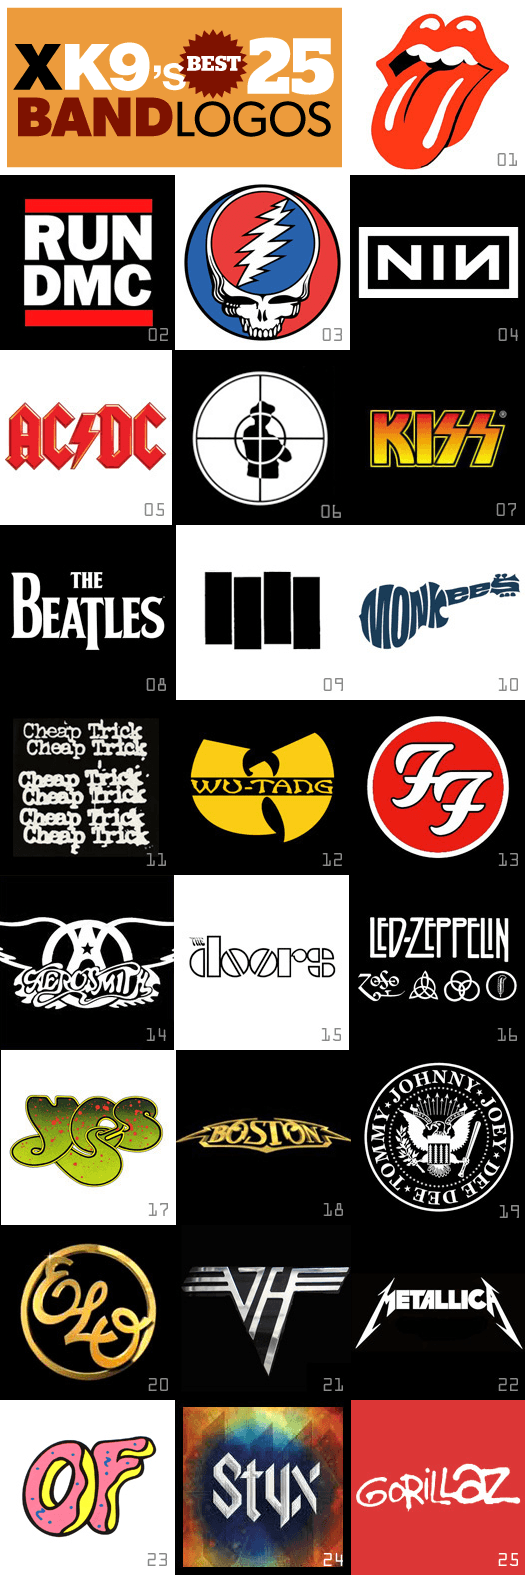 Best Rock Band Logo - XK9 » Best Band Logos?